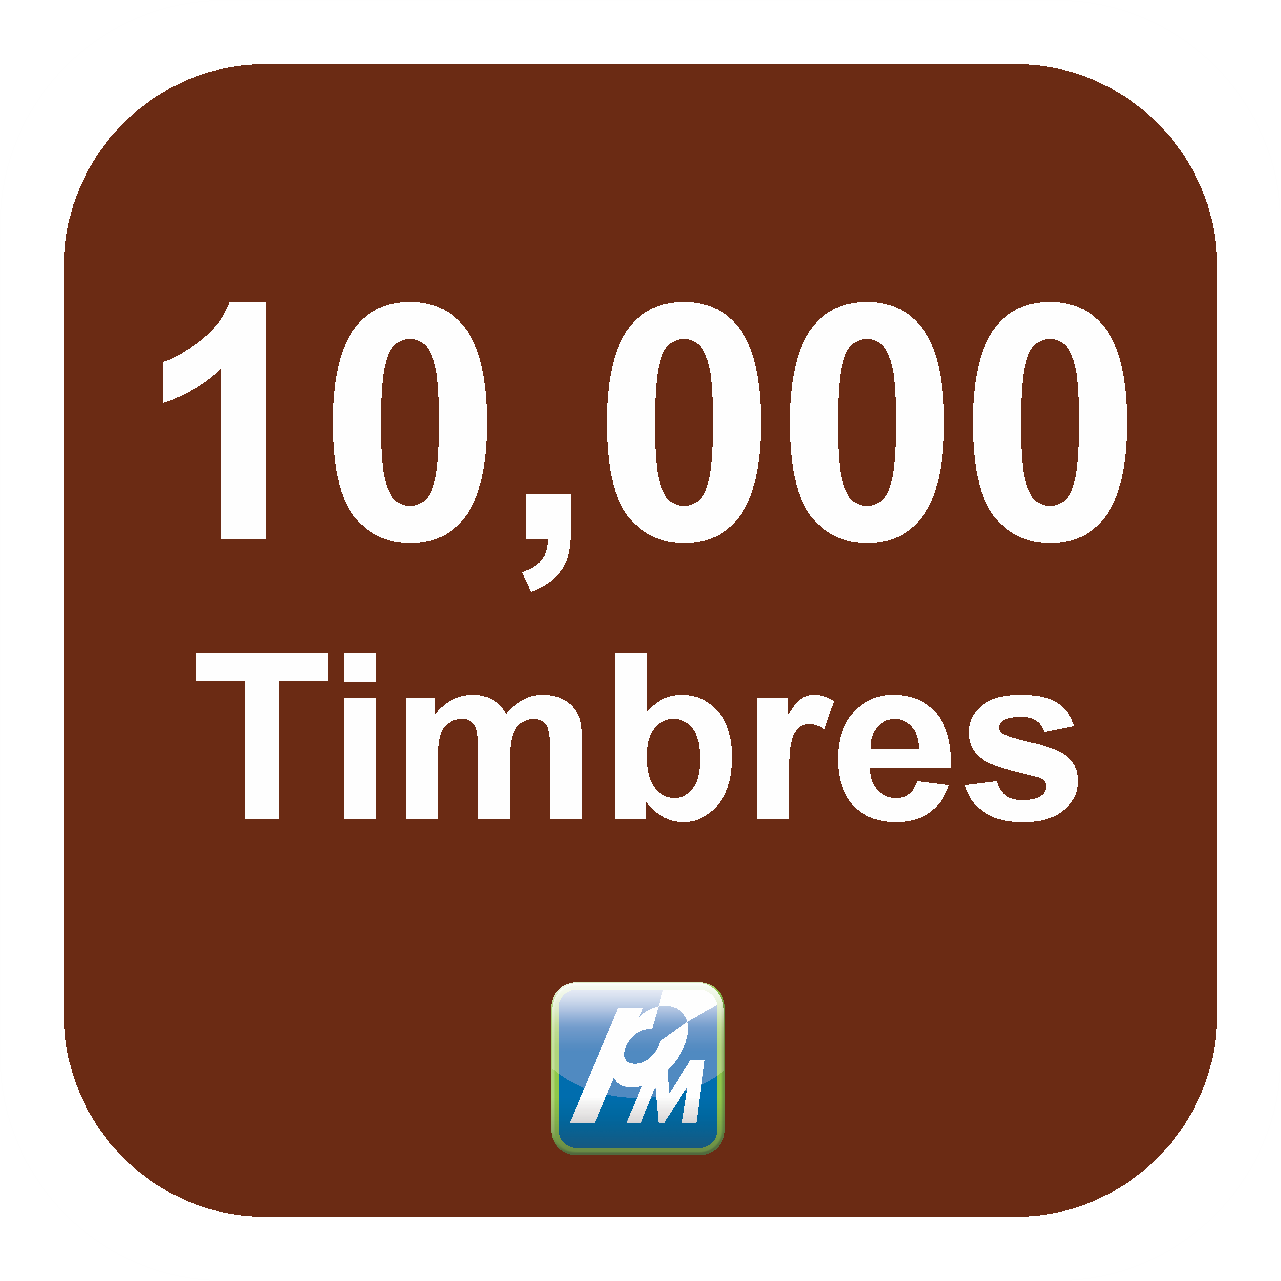 Aspel Timbres Fiscales - 10,000 Timbres - Aspel. Programas de México